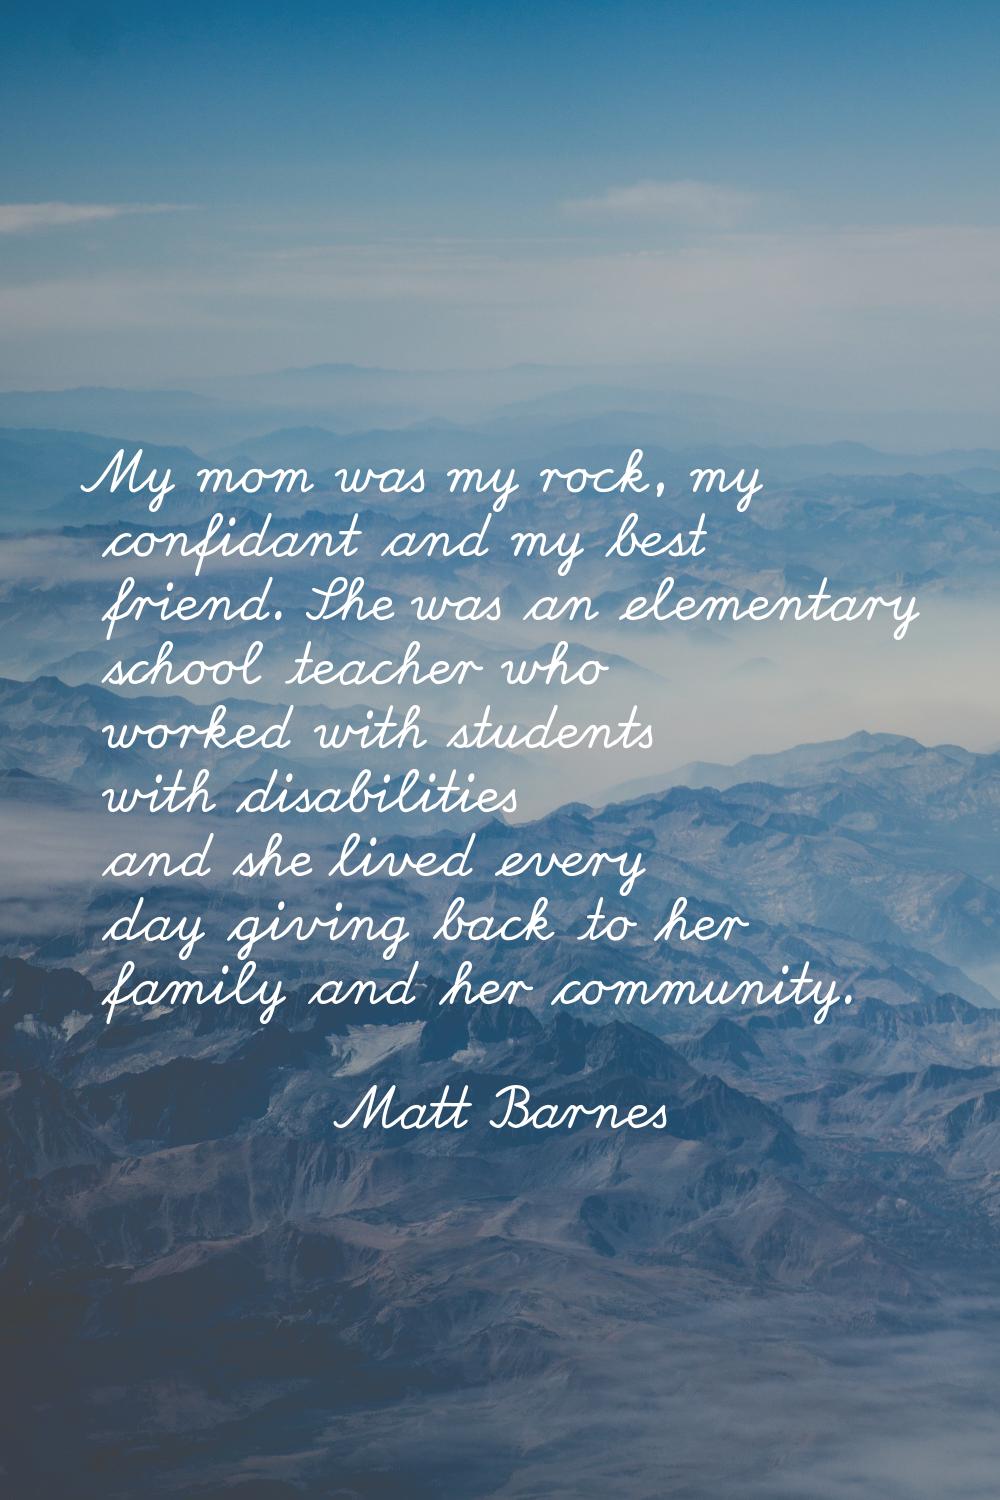 My mom was my rock, my confidant and my best friend. She was an elementary school teacher who worke